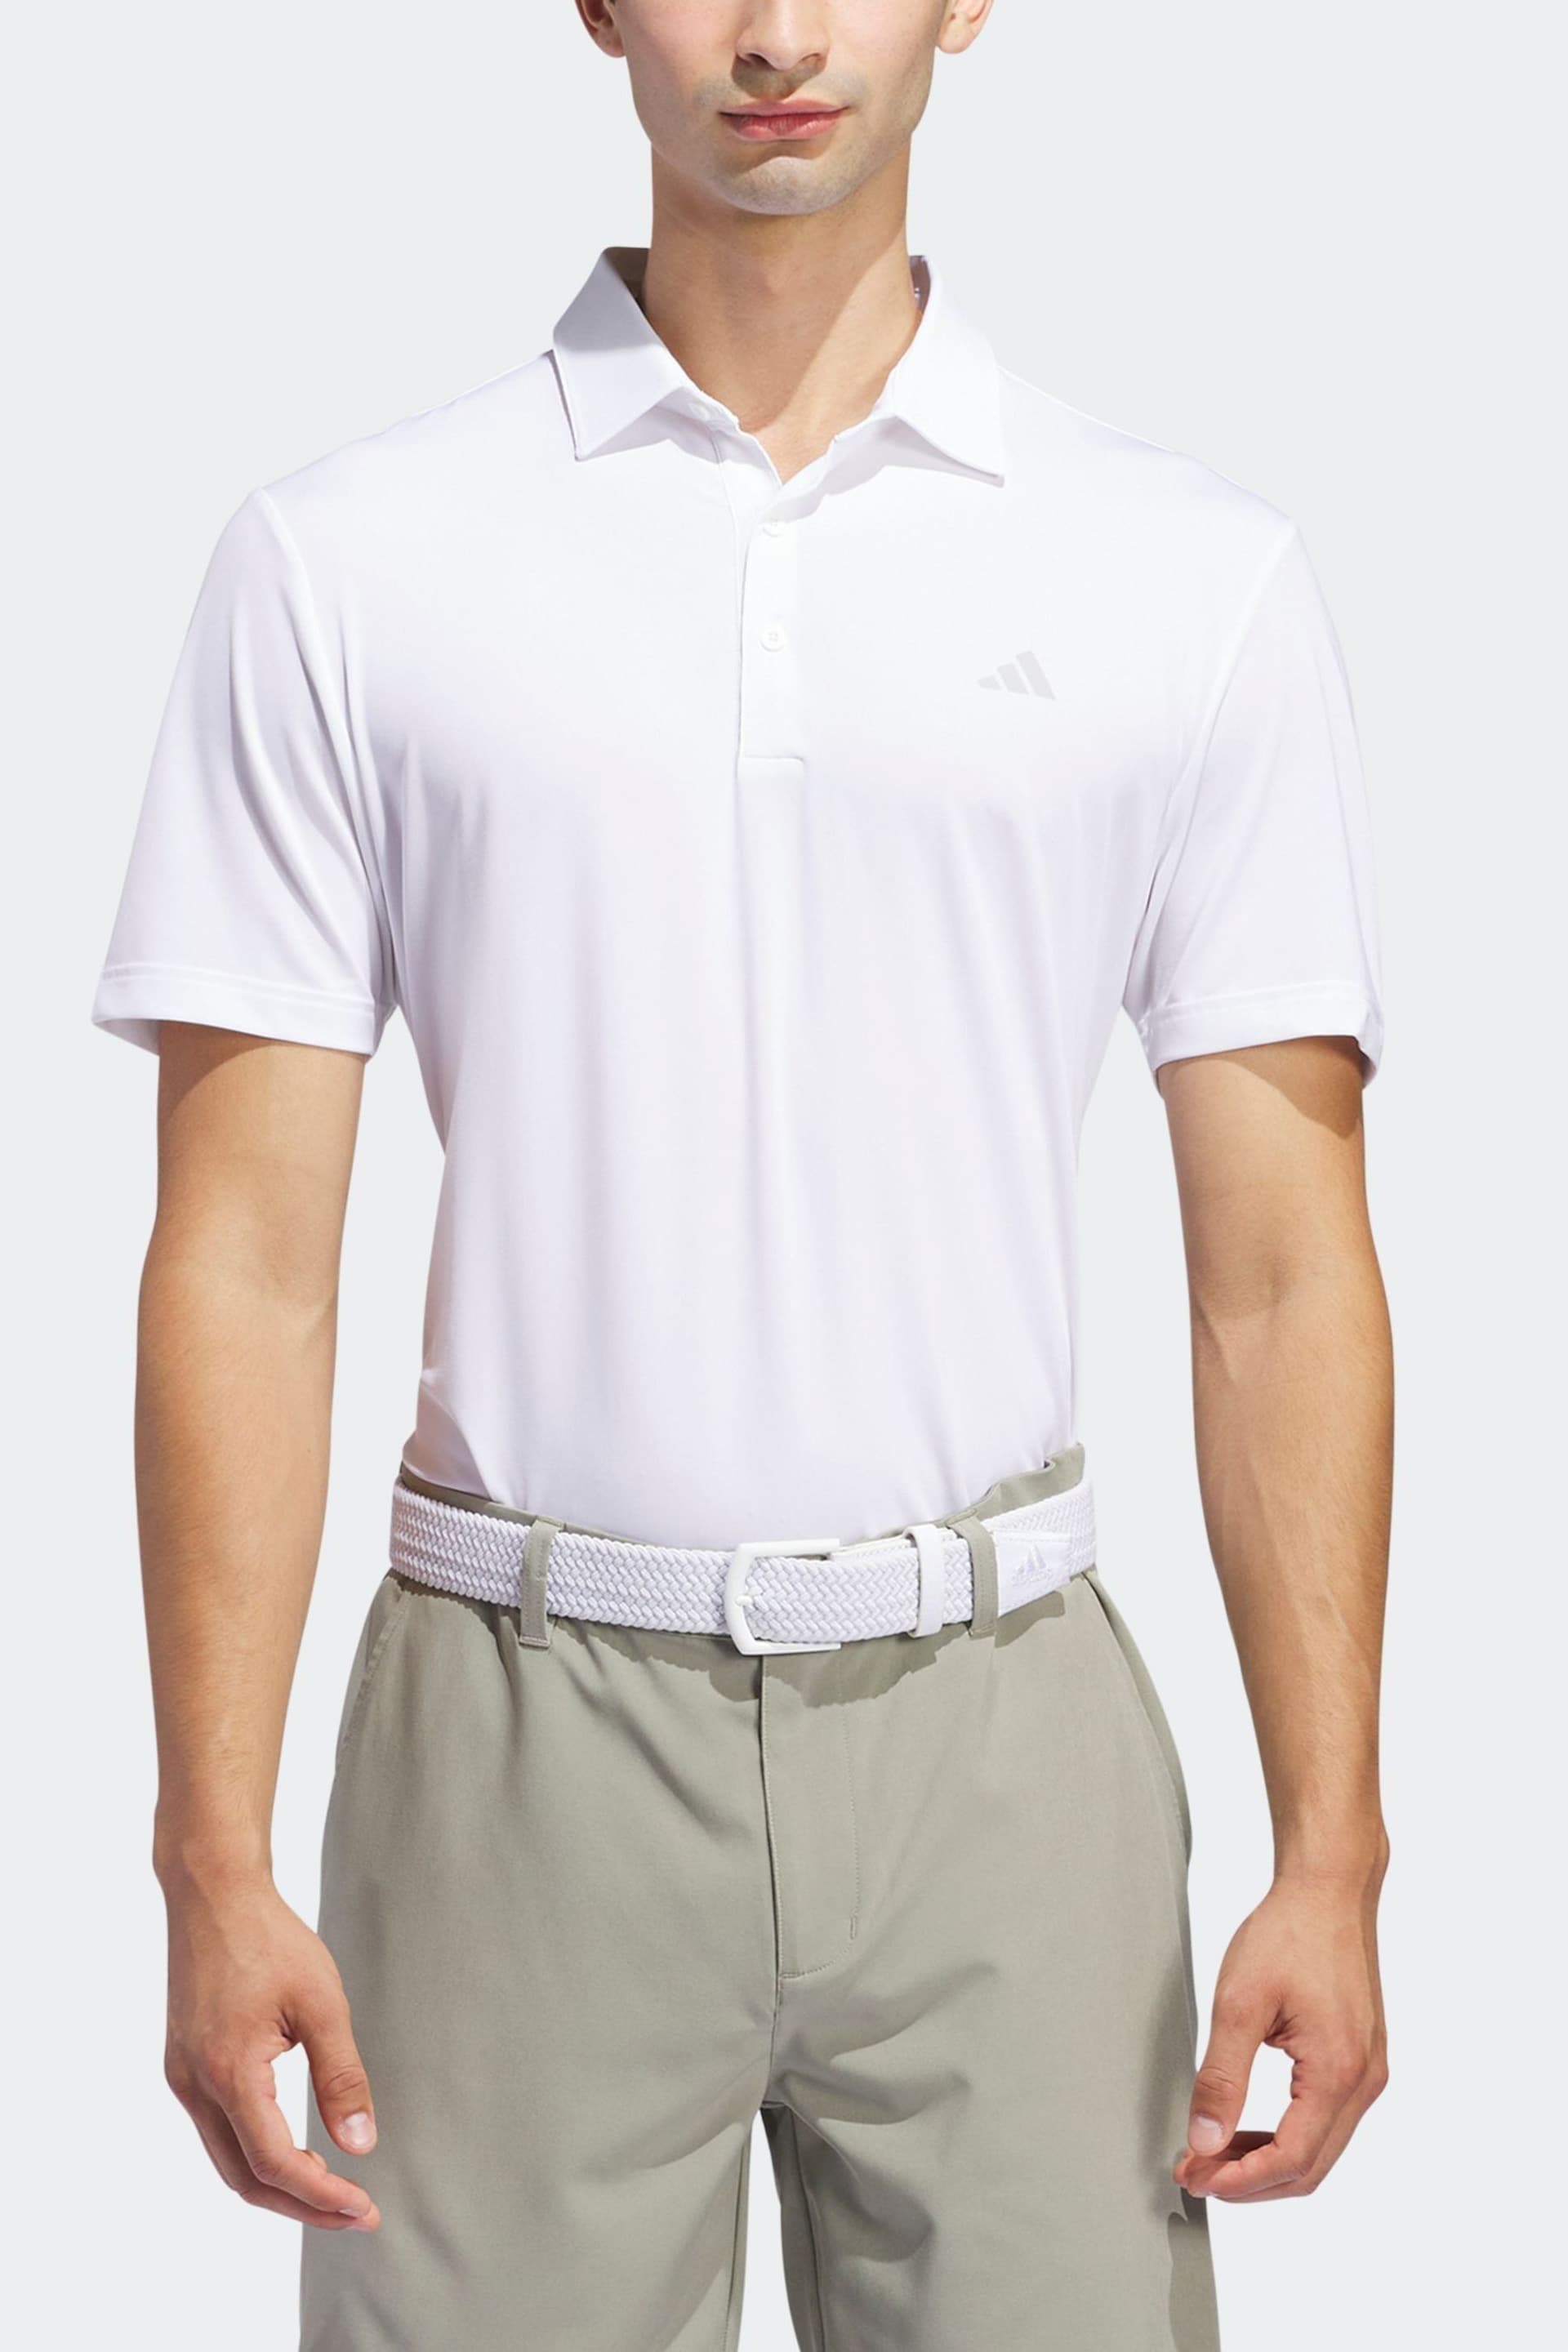 adidas Golf Ultimate365 Solid Polo Shirt - Image 4 of 8